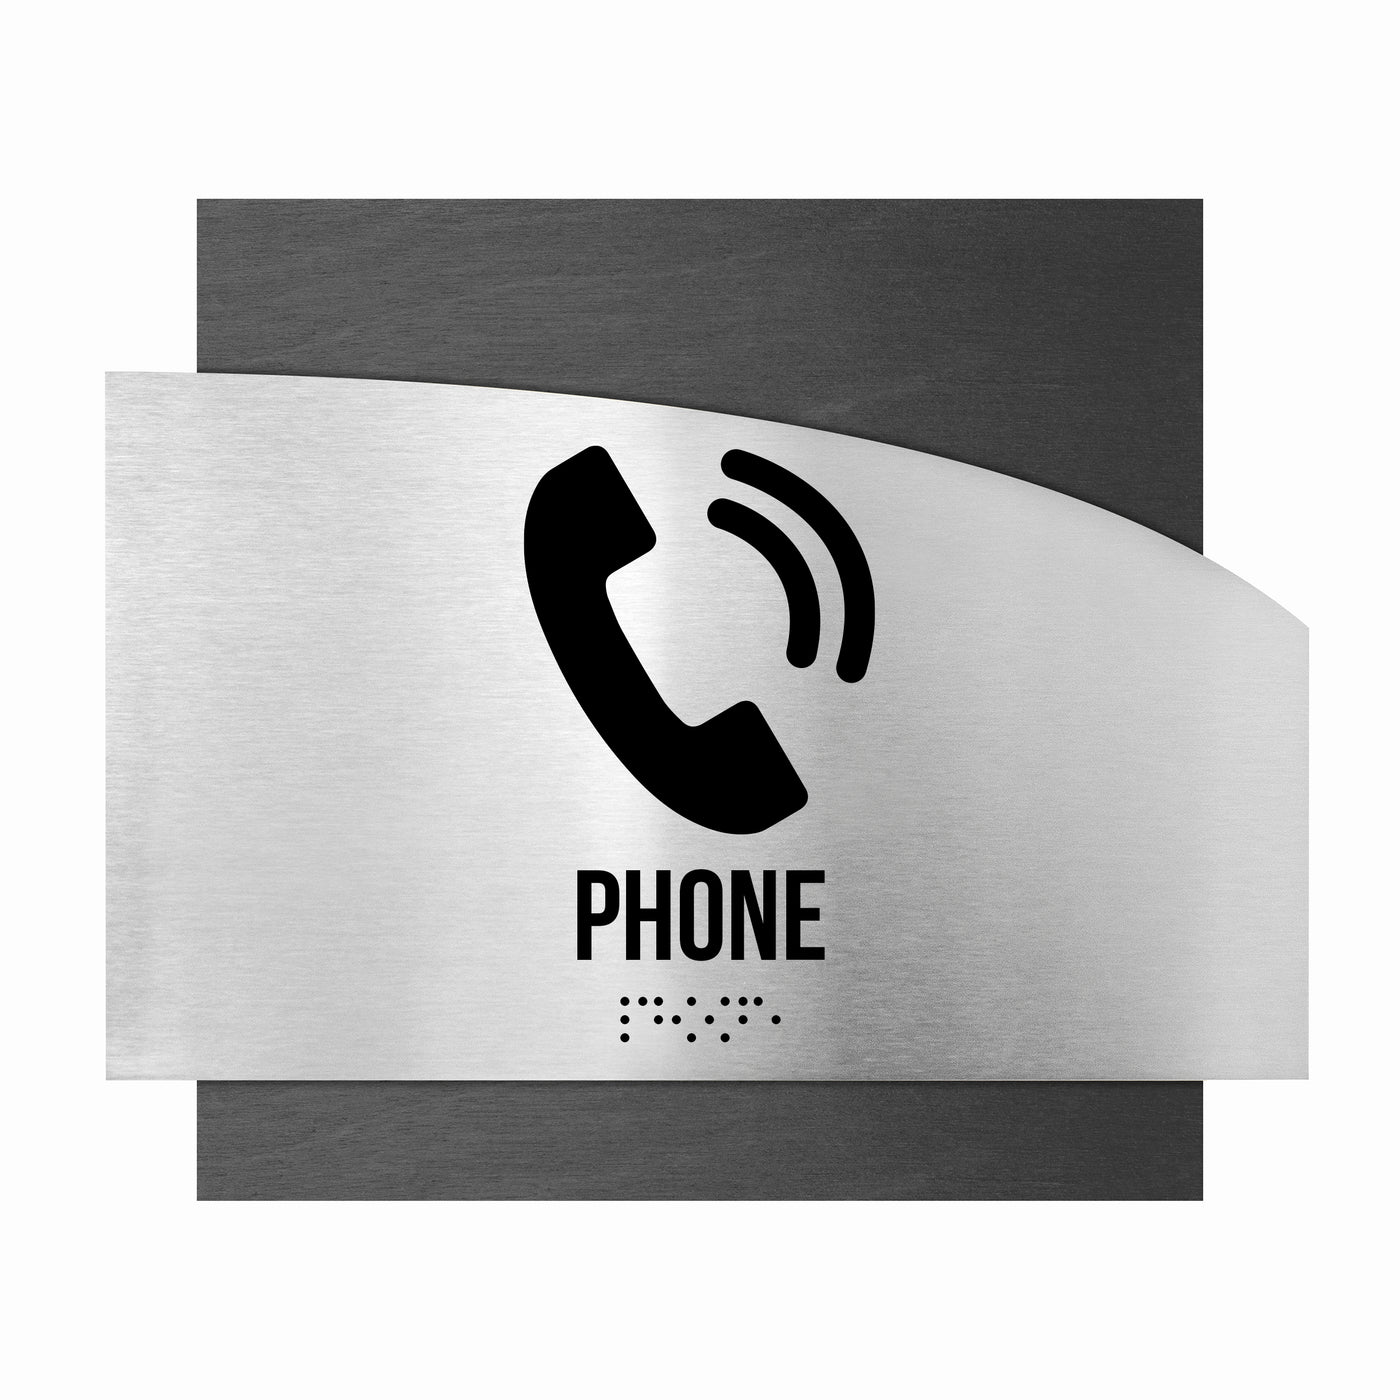 Door Signs - Phone Signs - Stainless Steel & Wood Plate - "Wave" Design